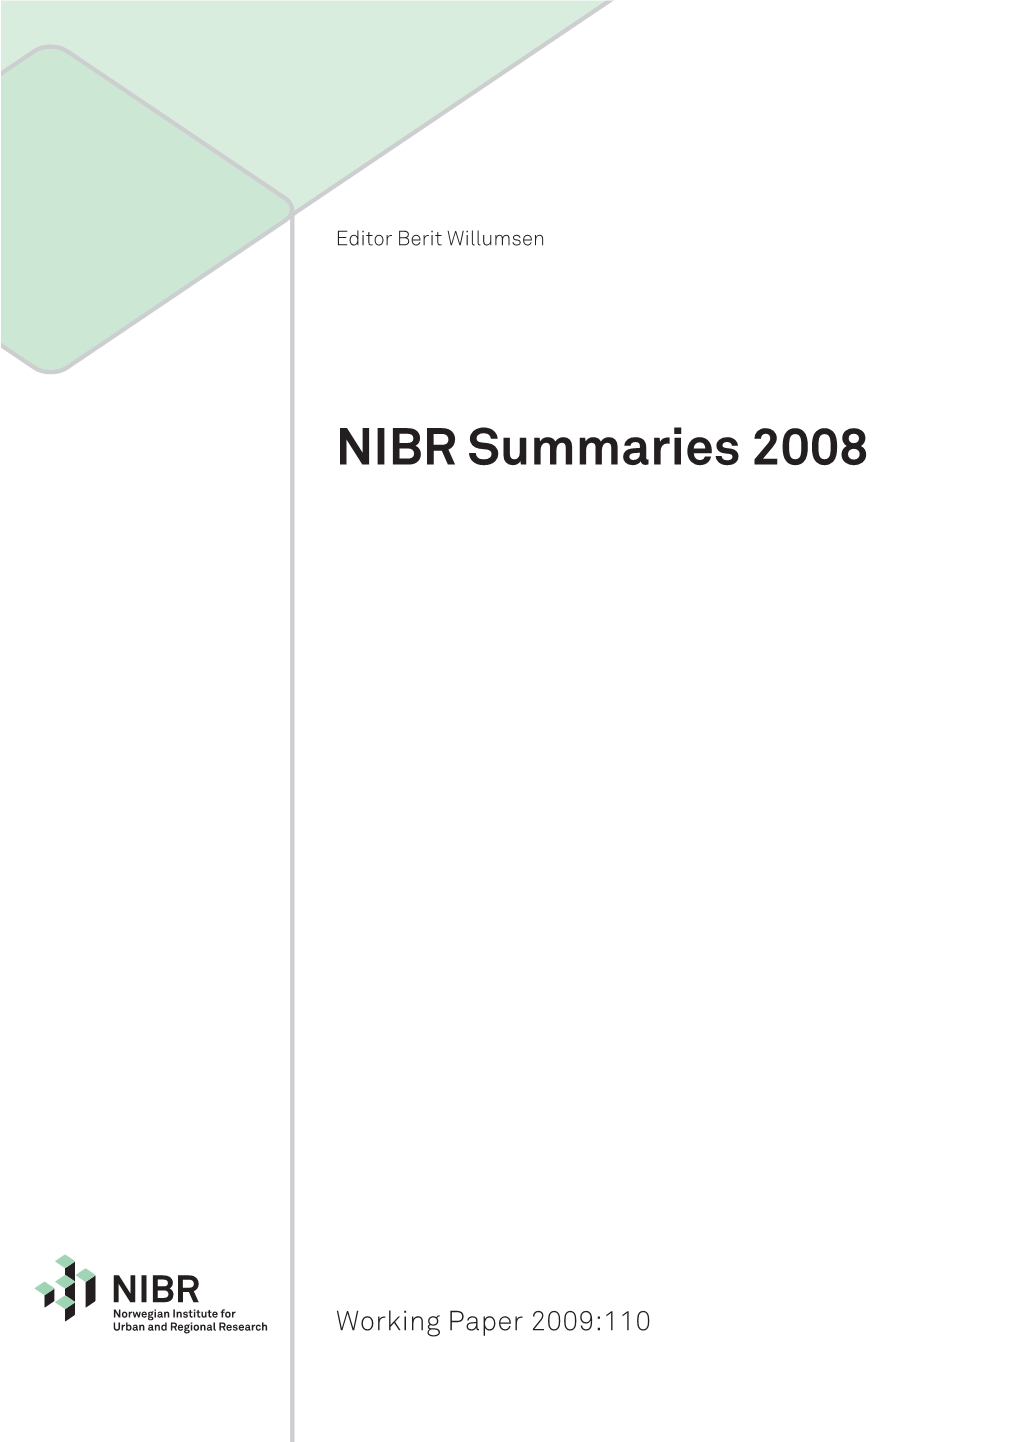 NIBR Summaries 2008